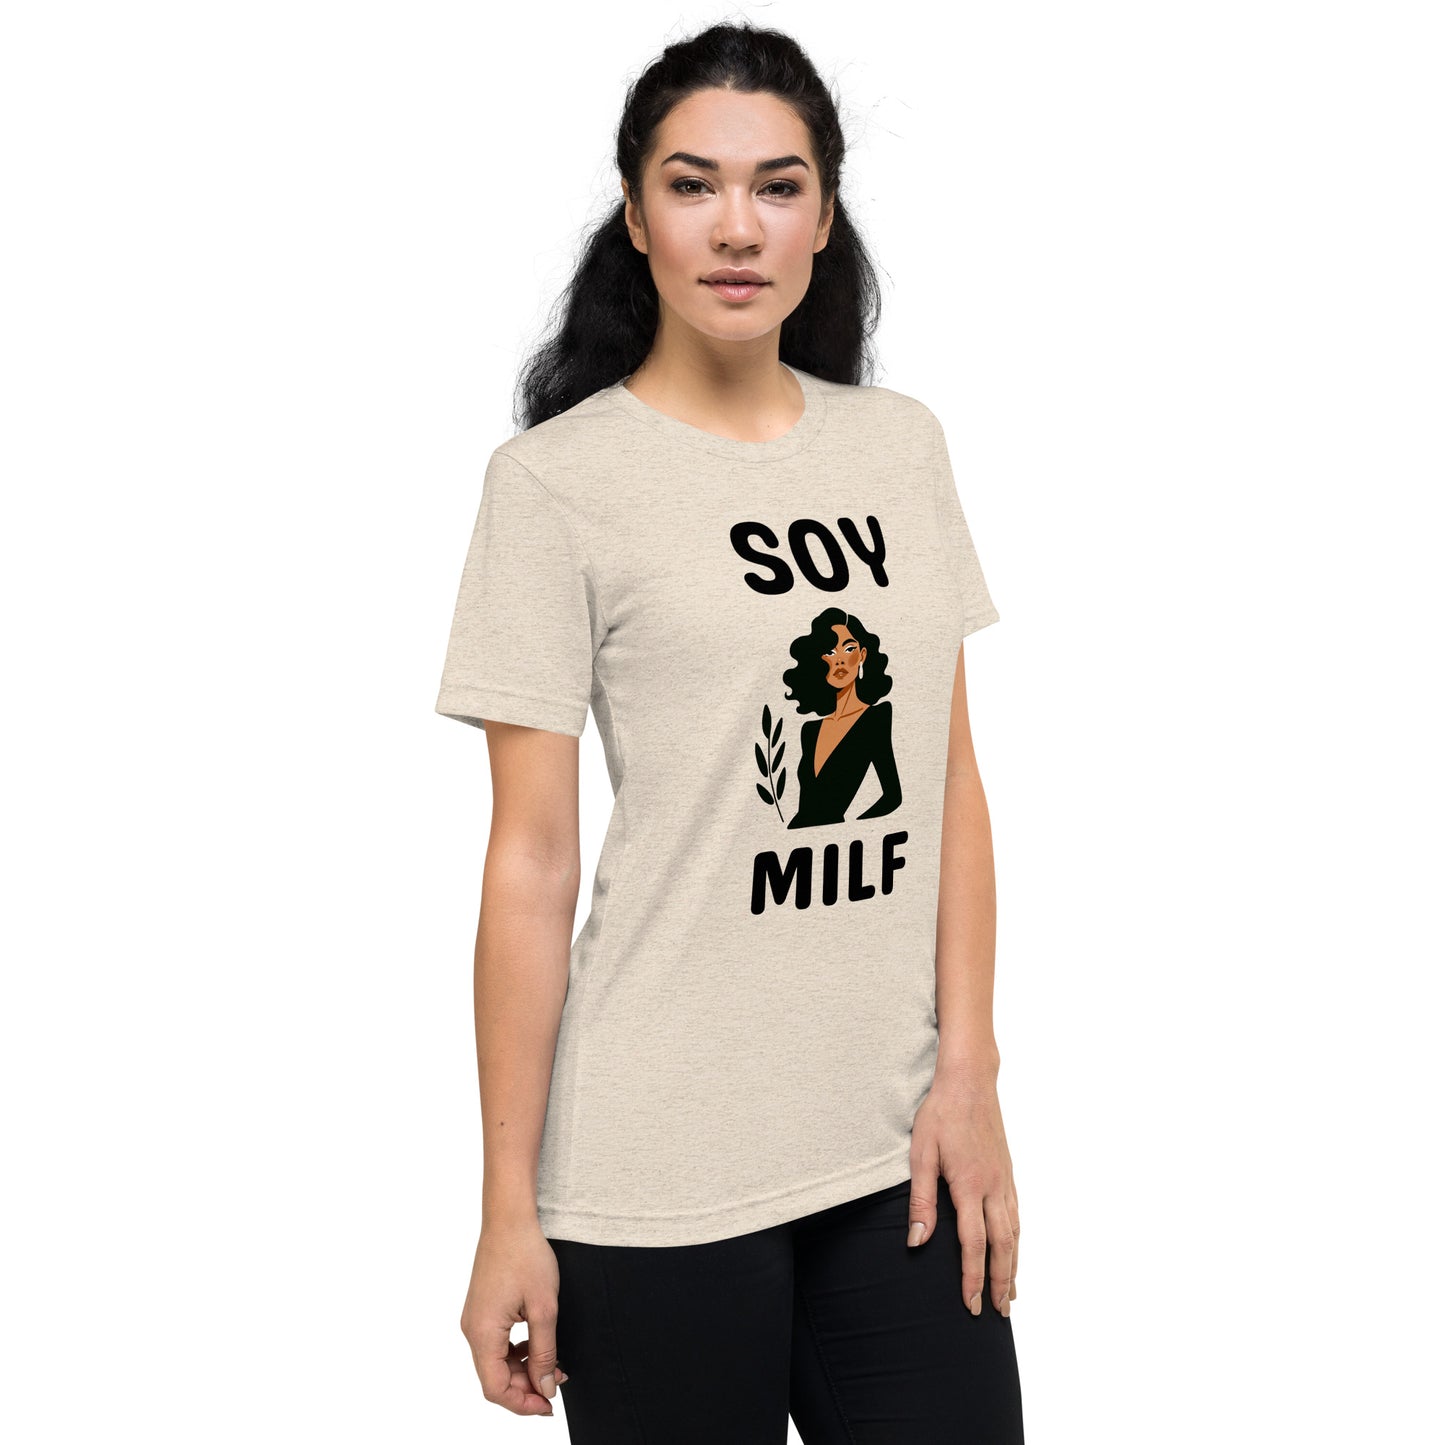 Soy Milf T-shirt